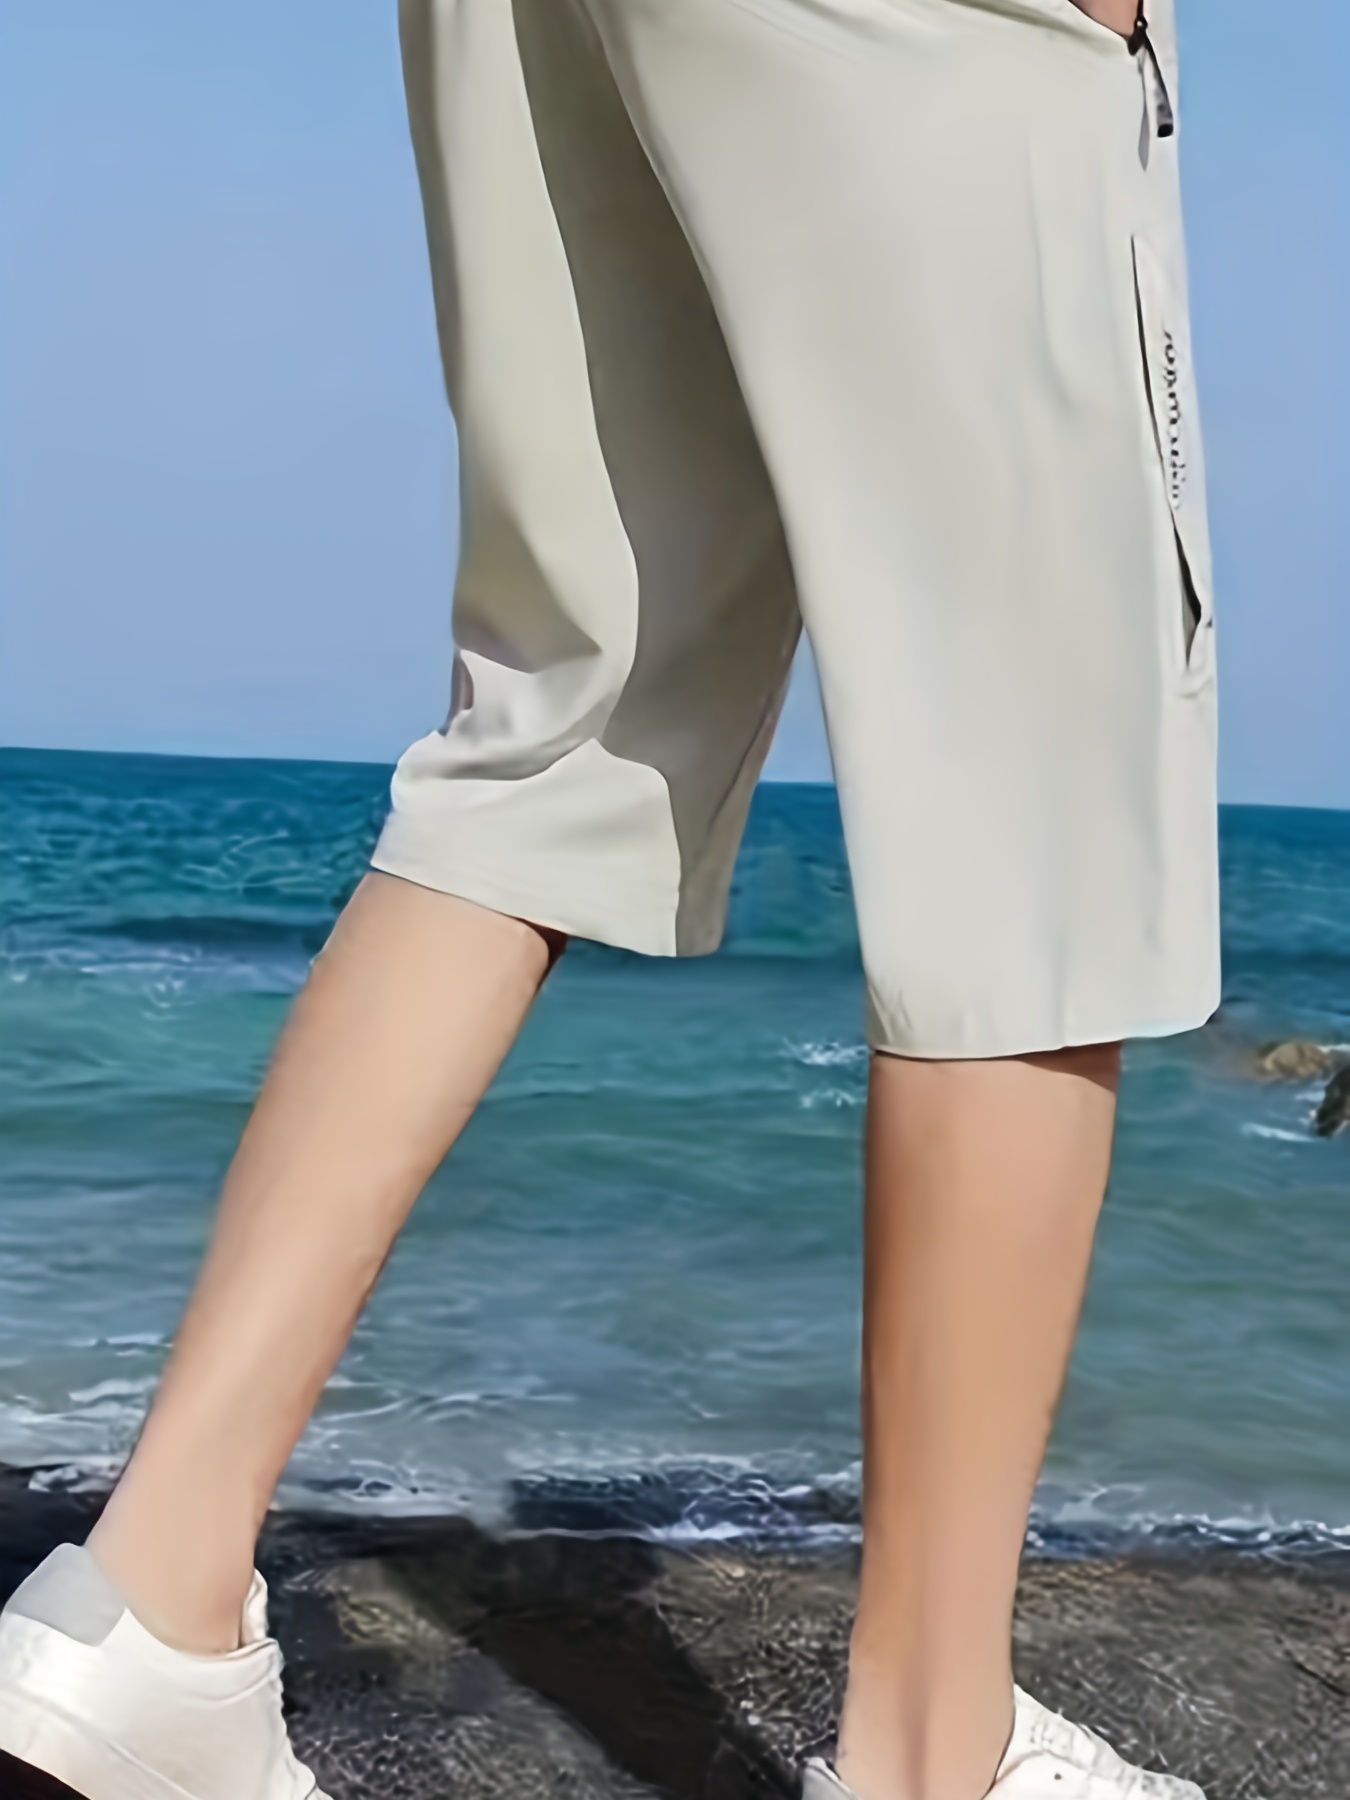 Pantalones De Chándal Deportivos Para Hombre Con Tobillo Elástico/gris  Claro, Mode de Mujer